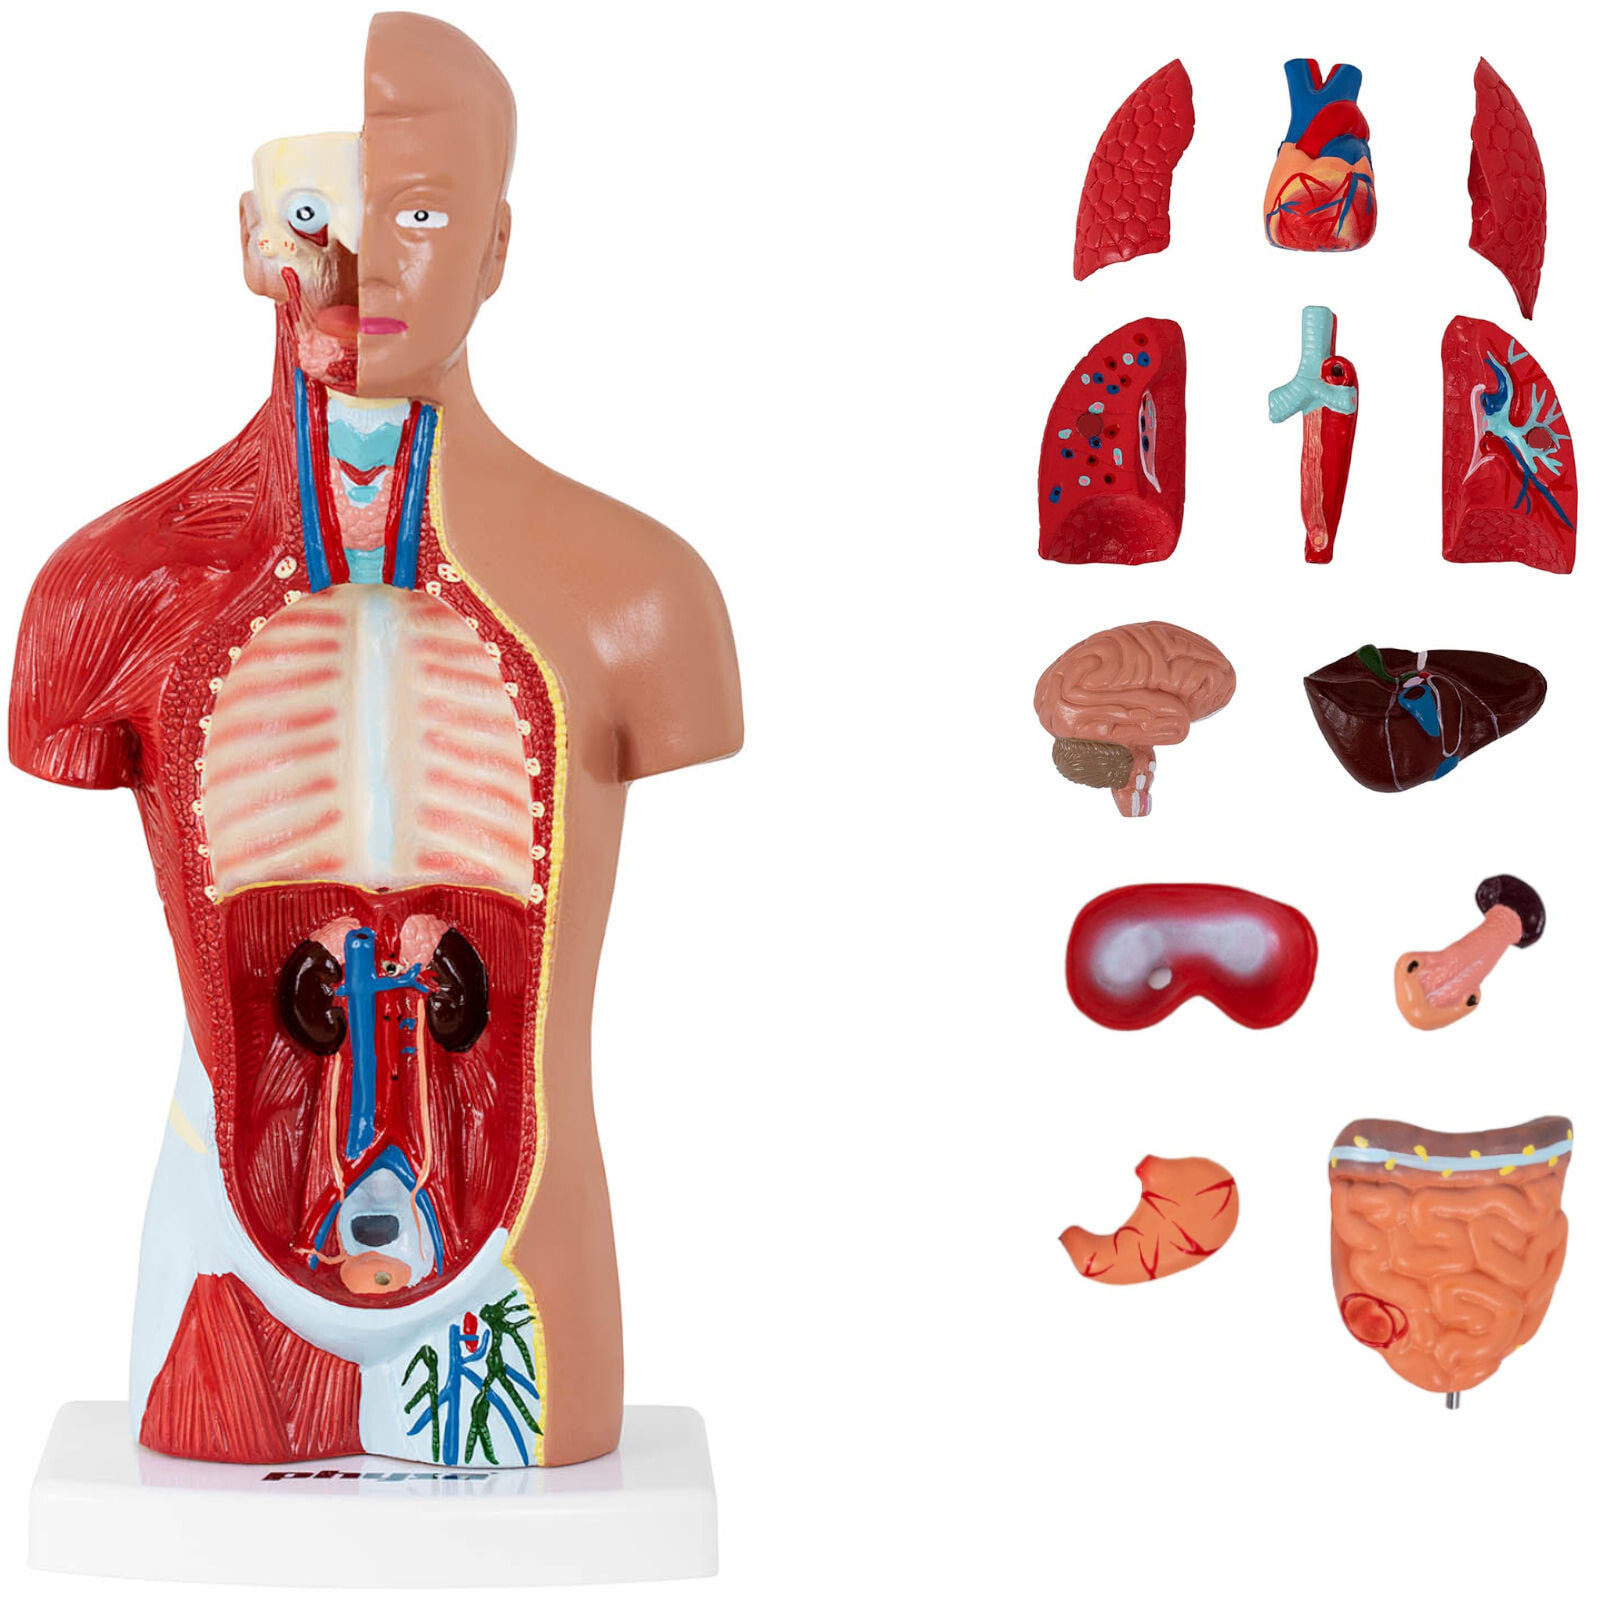 3D anatomical model of the human torso